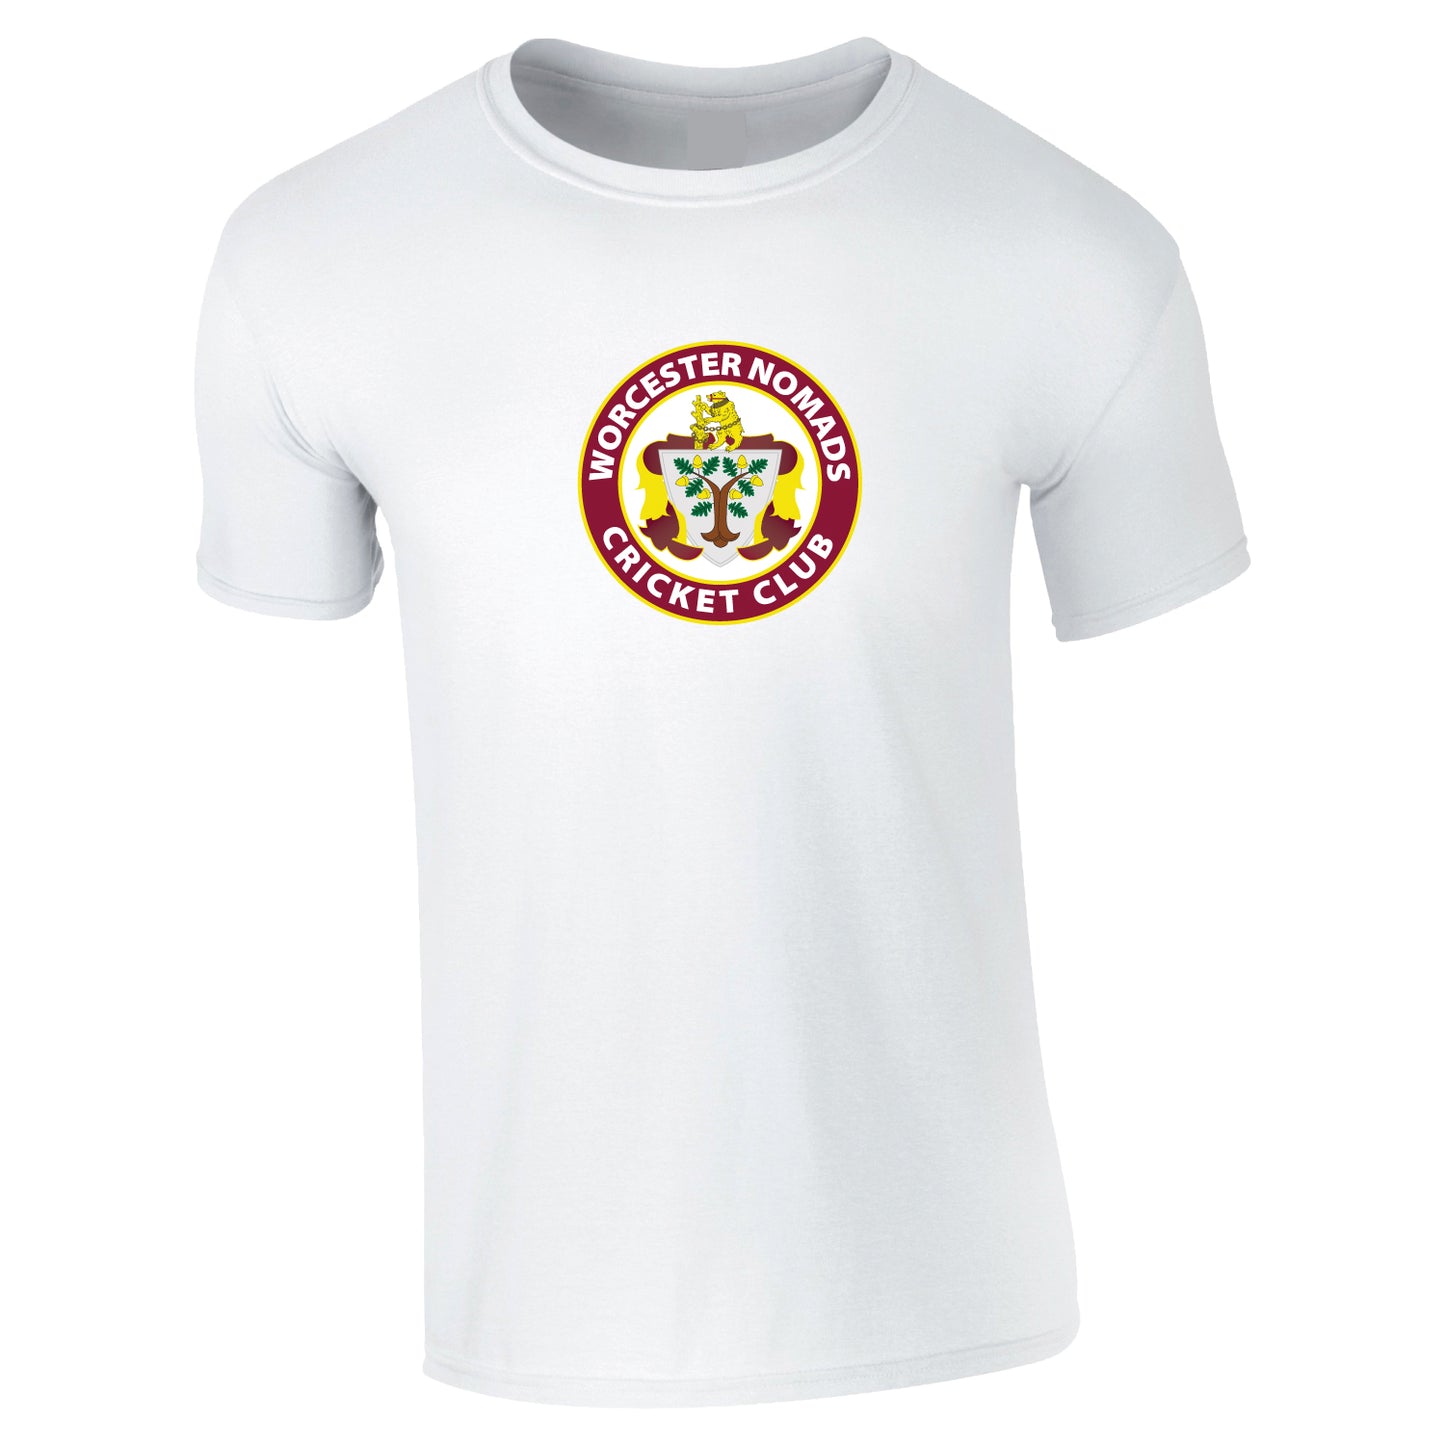 Worcester Nomads Cricket Club Logo T-Shirt